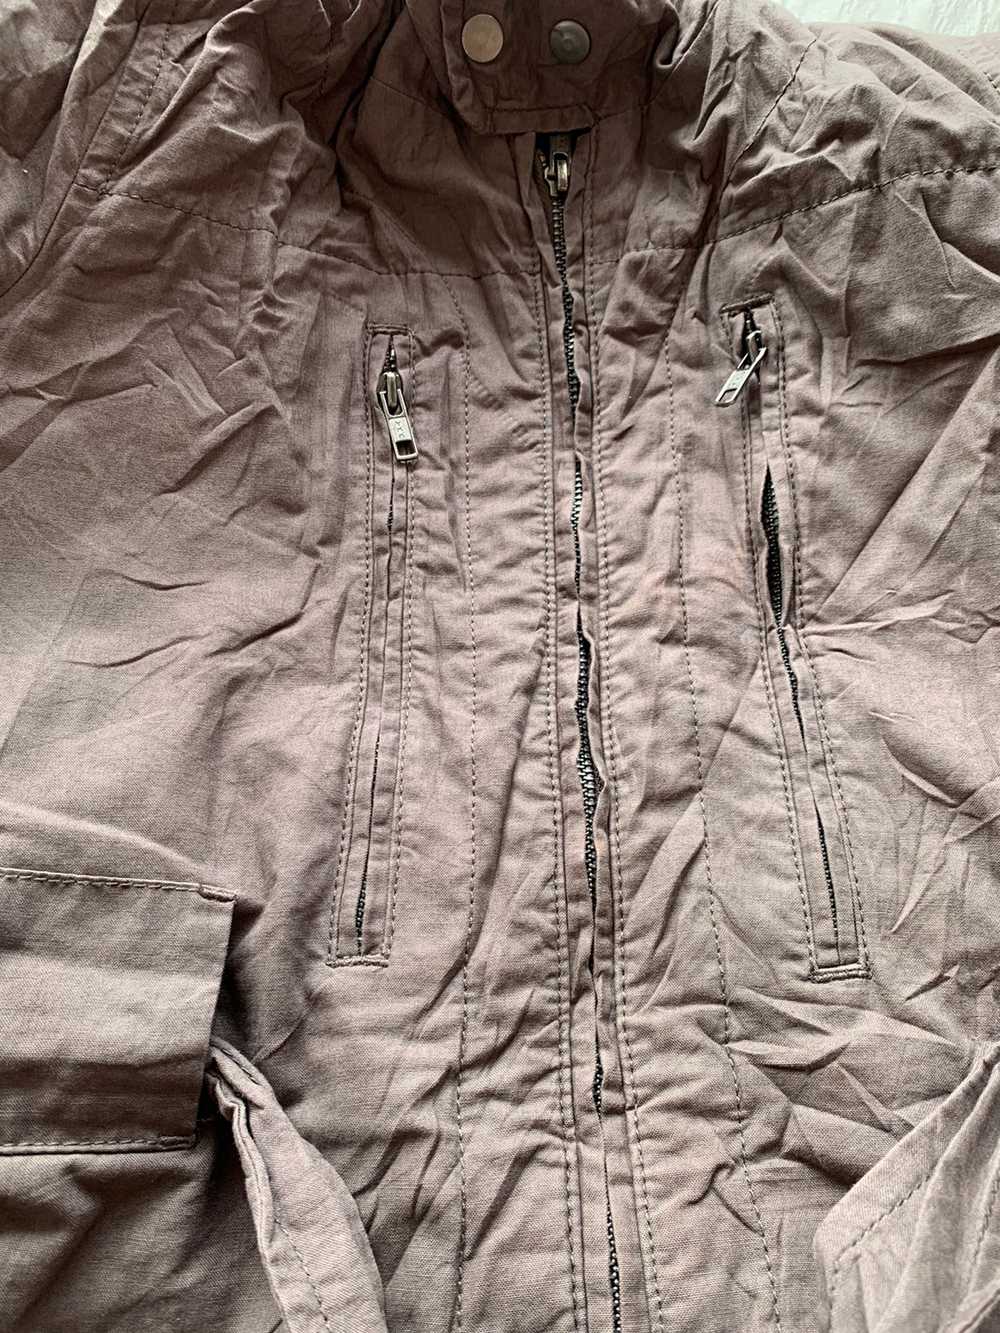 Diesel jackets full zipper nice design - image 4